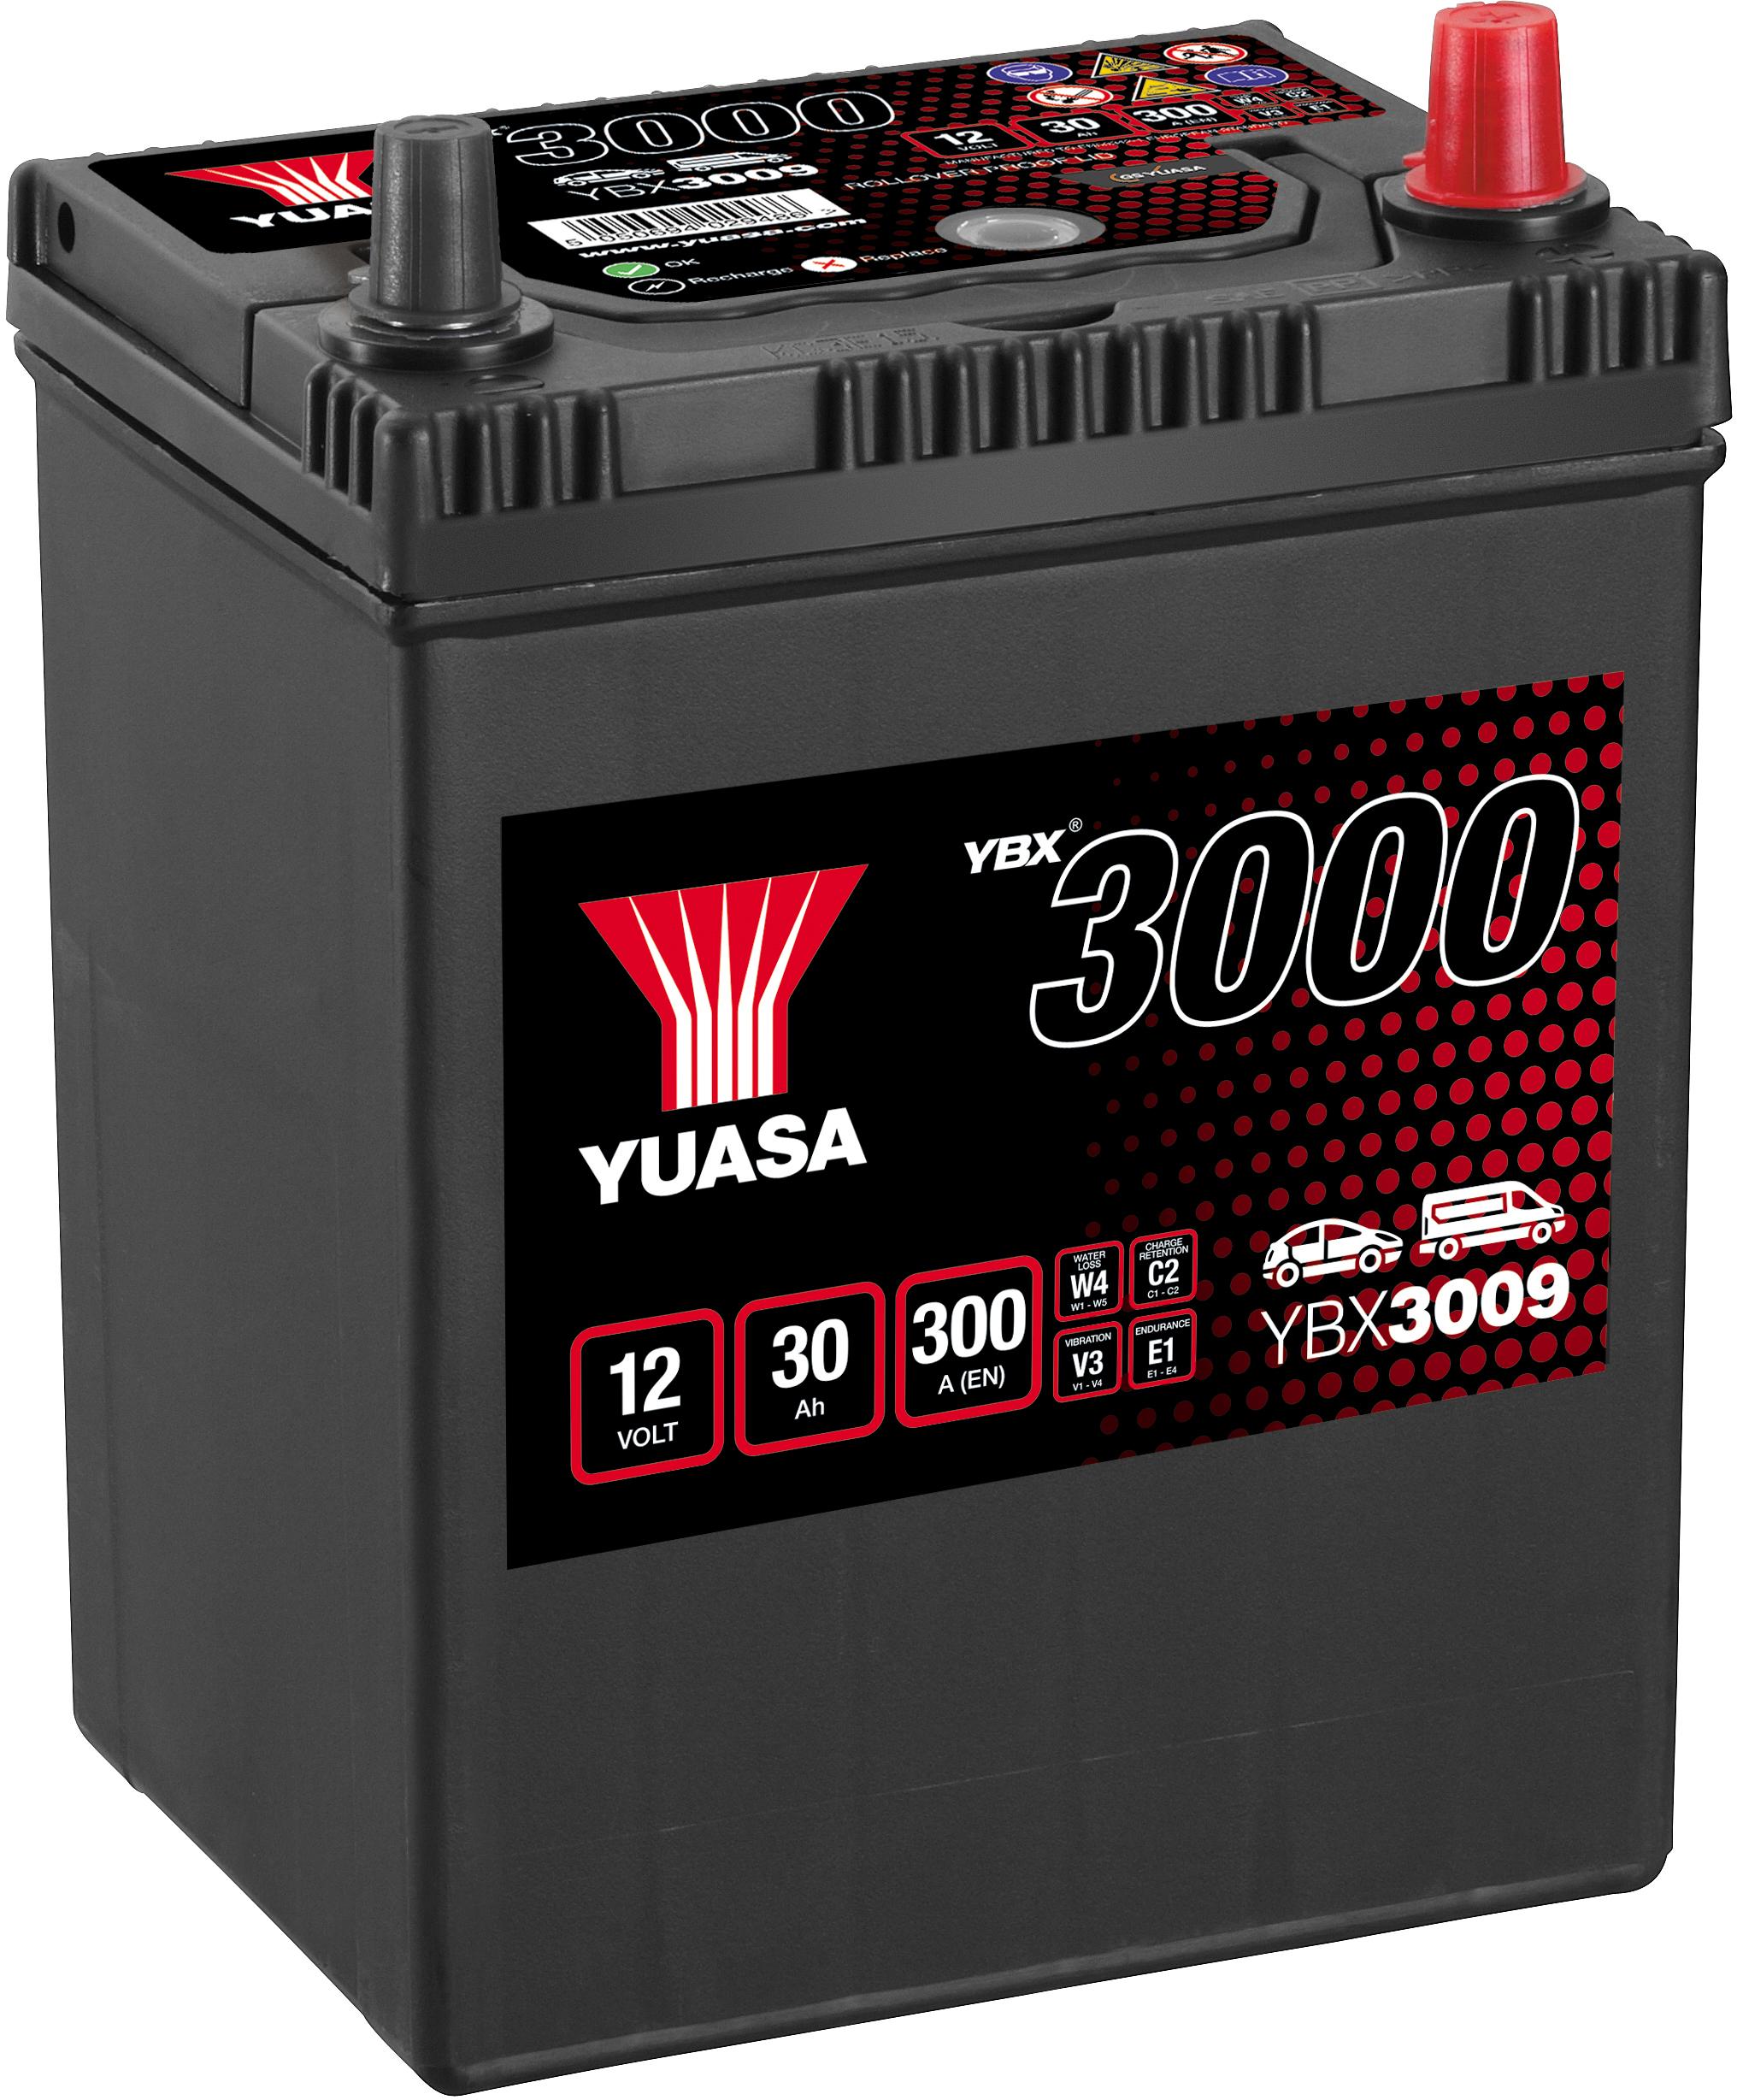 Ybx3009 12V 30Ah 300A Yuasa Smf Battery